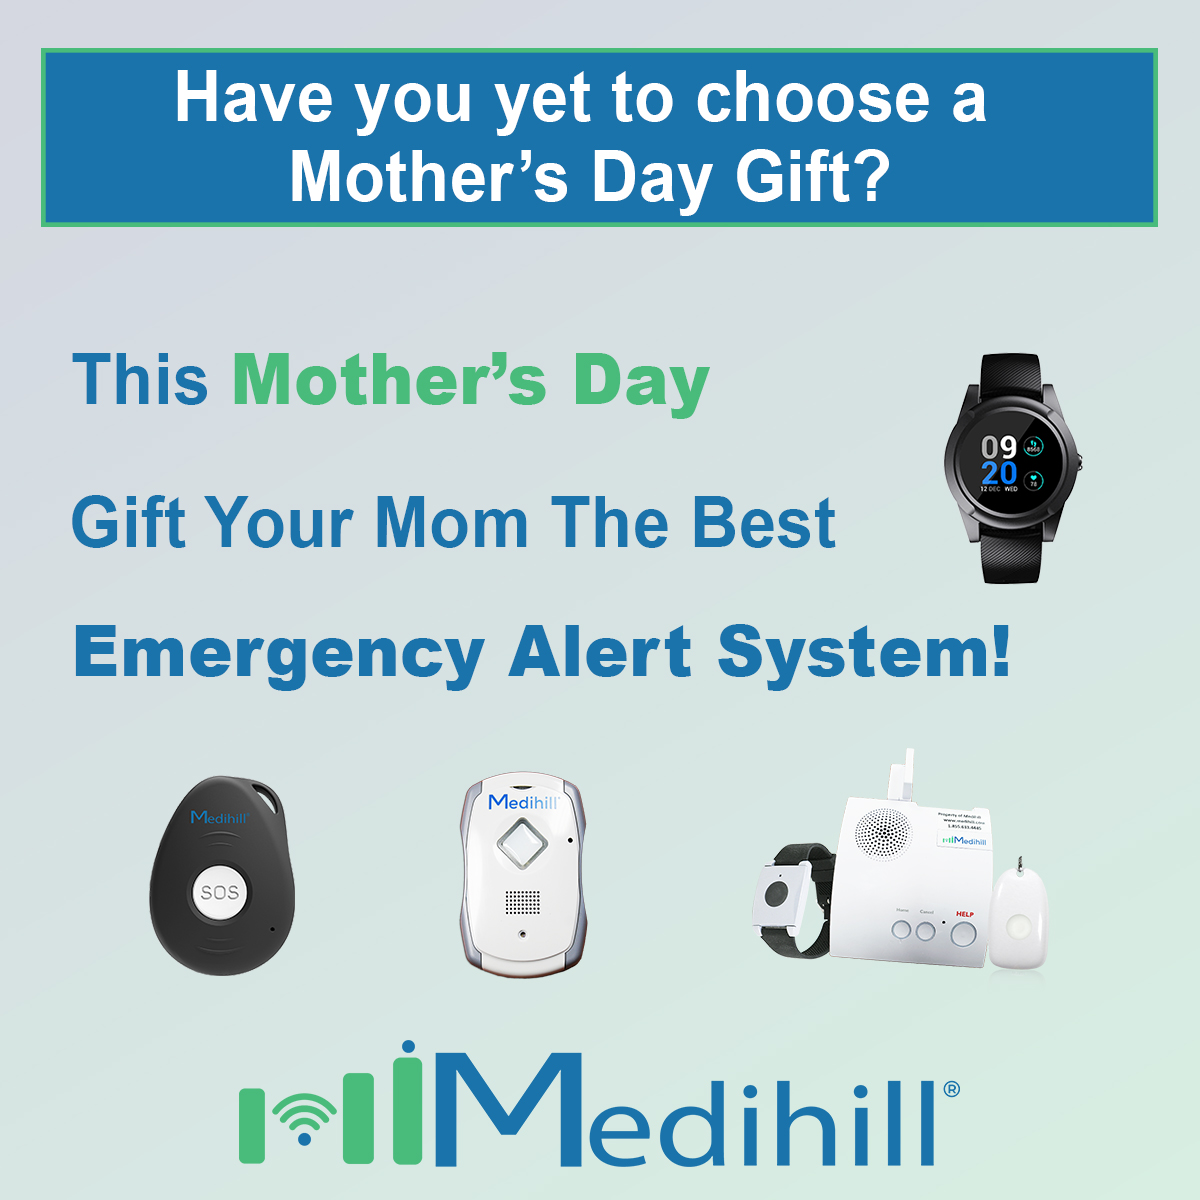 4 Days until Mother's Day

On this Mother's Day Gift your mom the best Emergency Alert System!
Order Now: medihill.ca  

#medicalalert #emergencyalert #emergency #mom #mothersday #Medihill